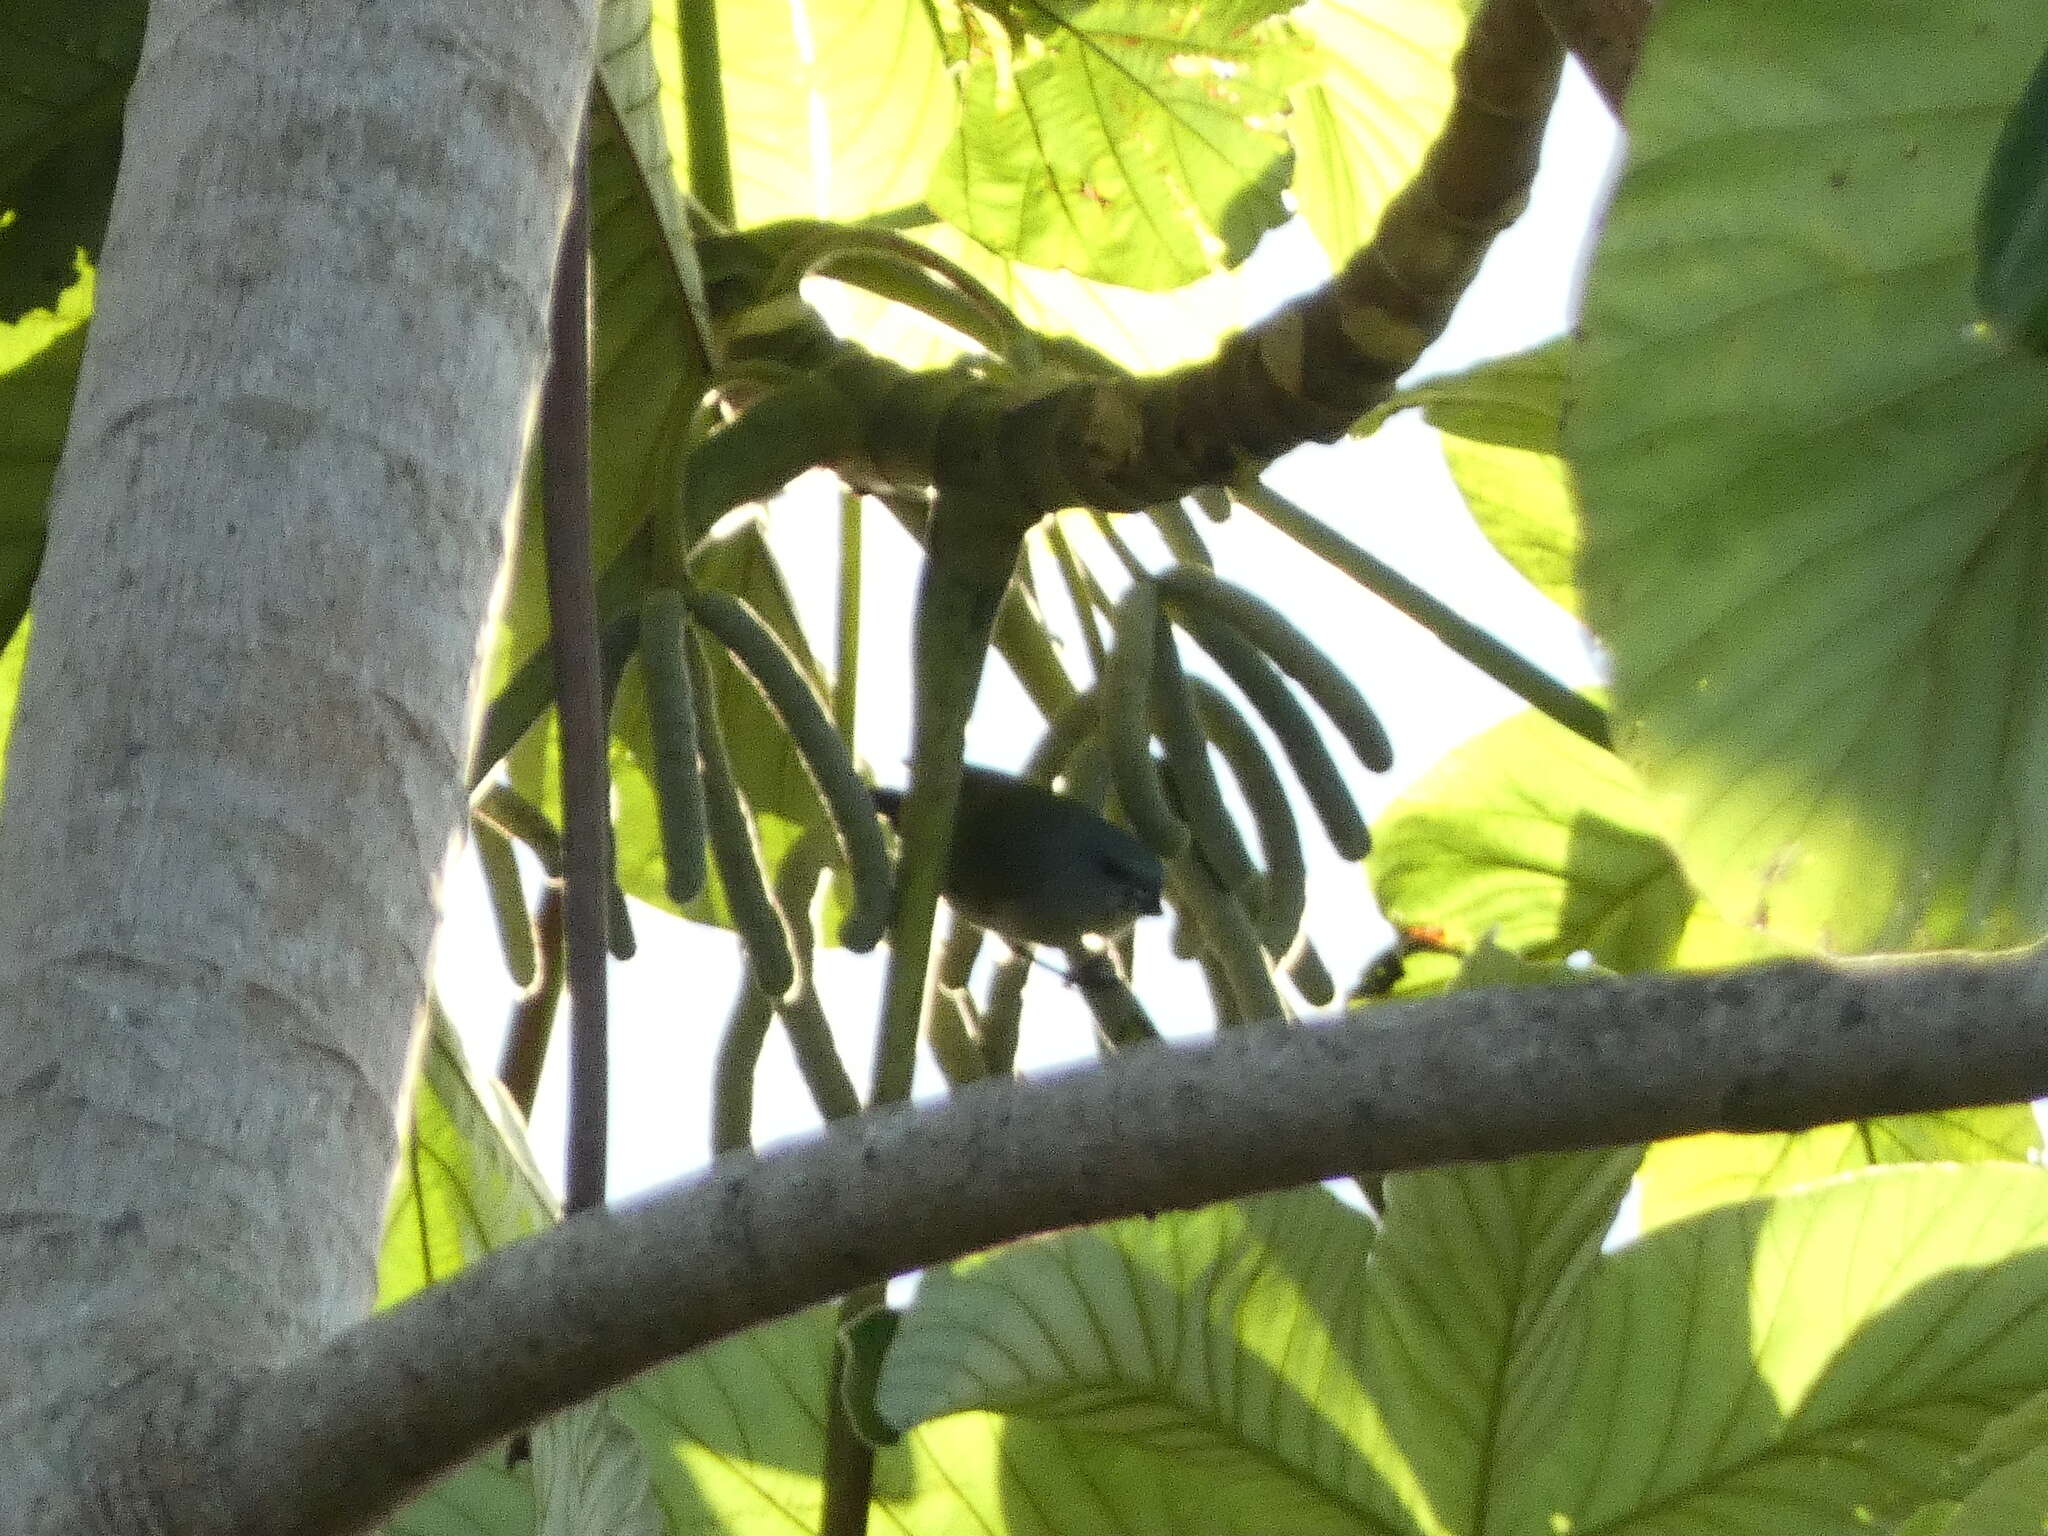 Image of Jamaican Euphonia